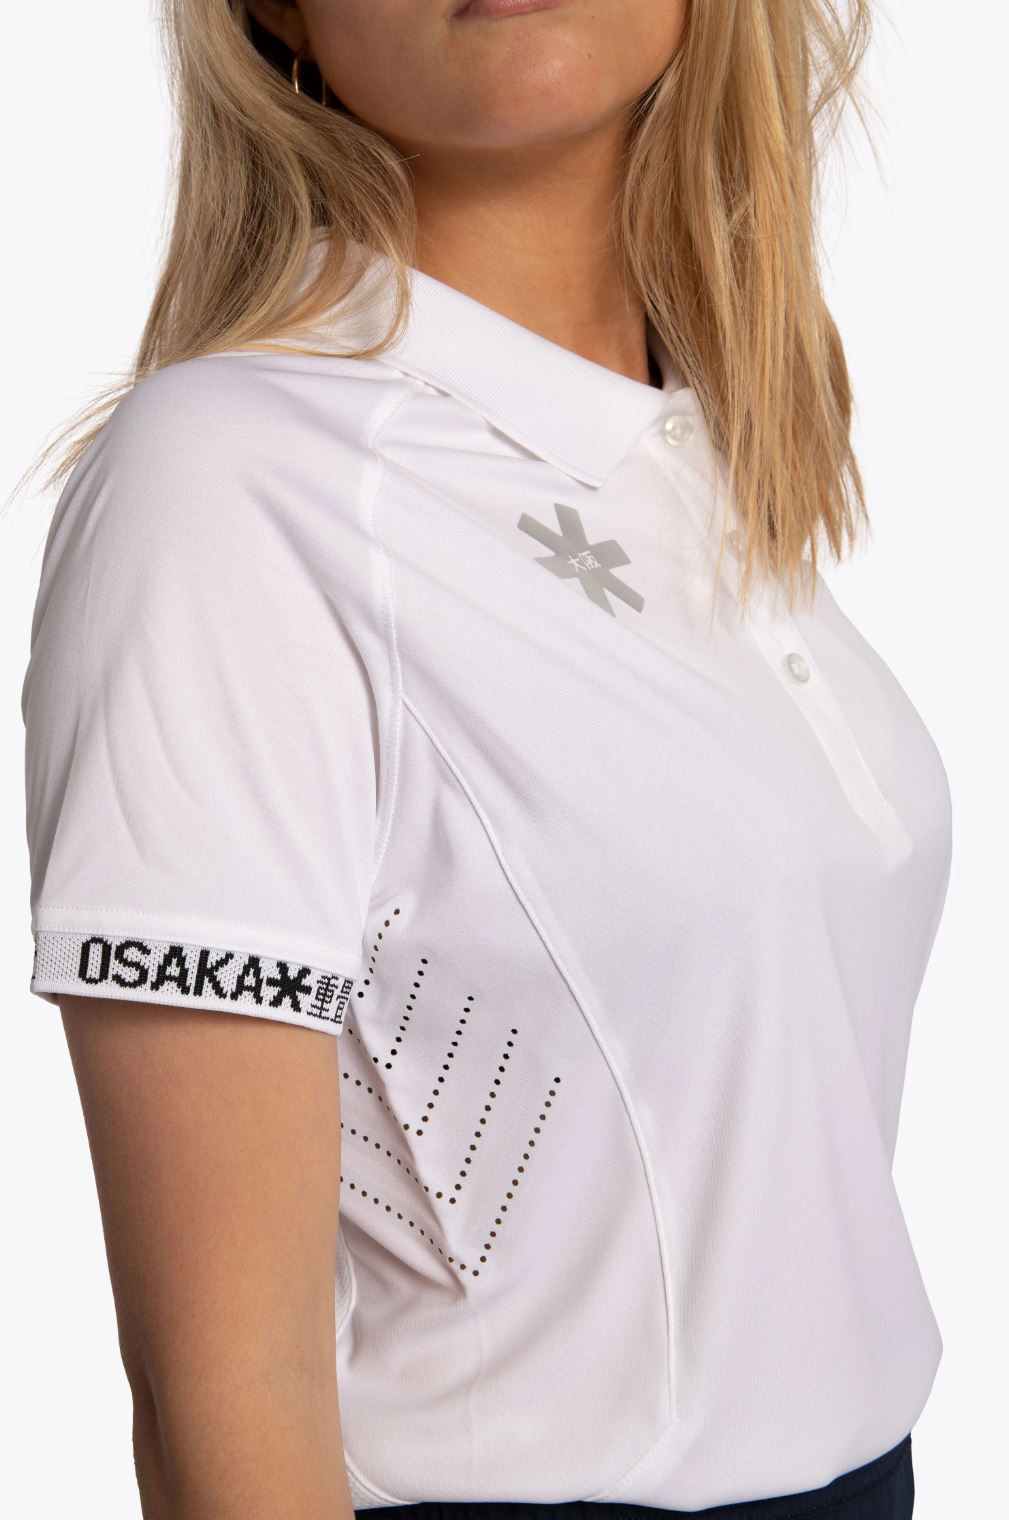 Se Osaka Women's Polo Jersey (Hvid) - XL hos Padellife